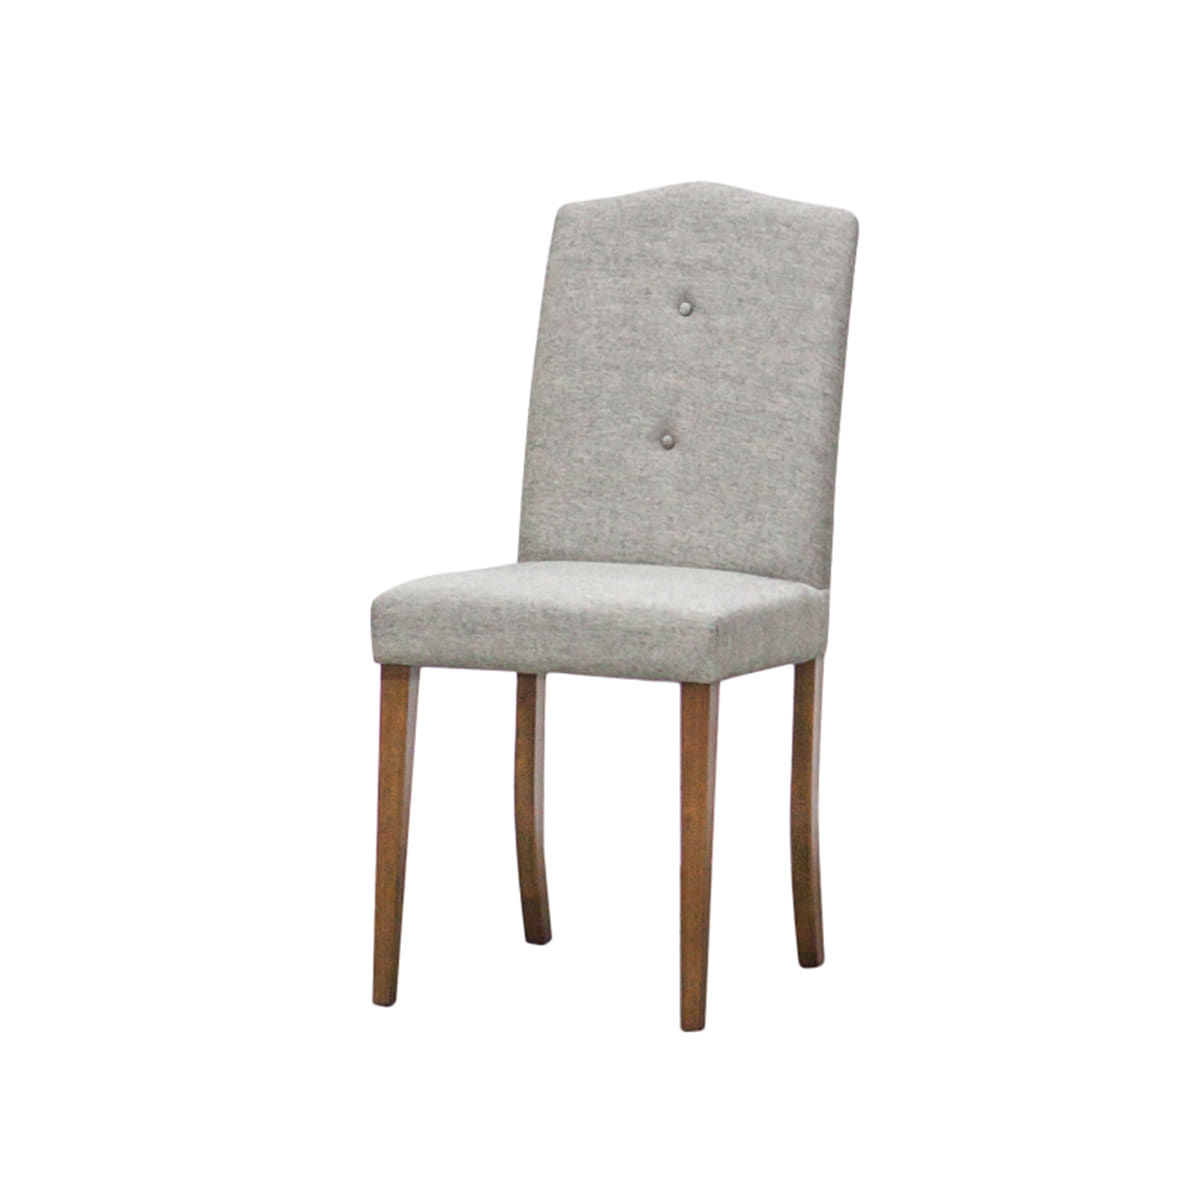 Zacc collection by SEDEC B-Moroc Walnut Dining Chair  B-모록 식탁 의자 - K201 (블랙 트위드)